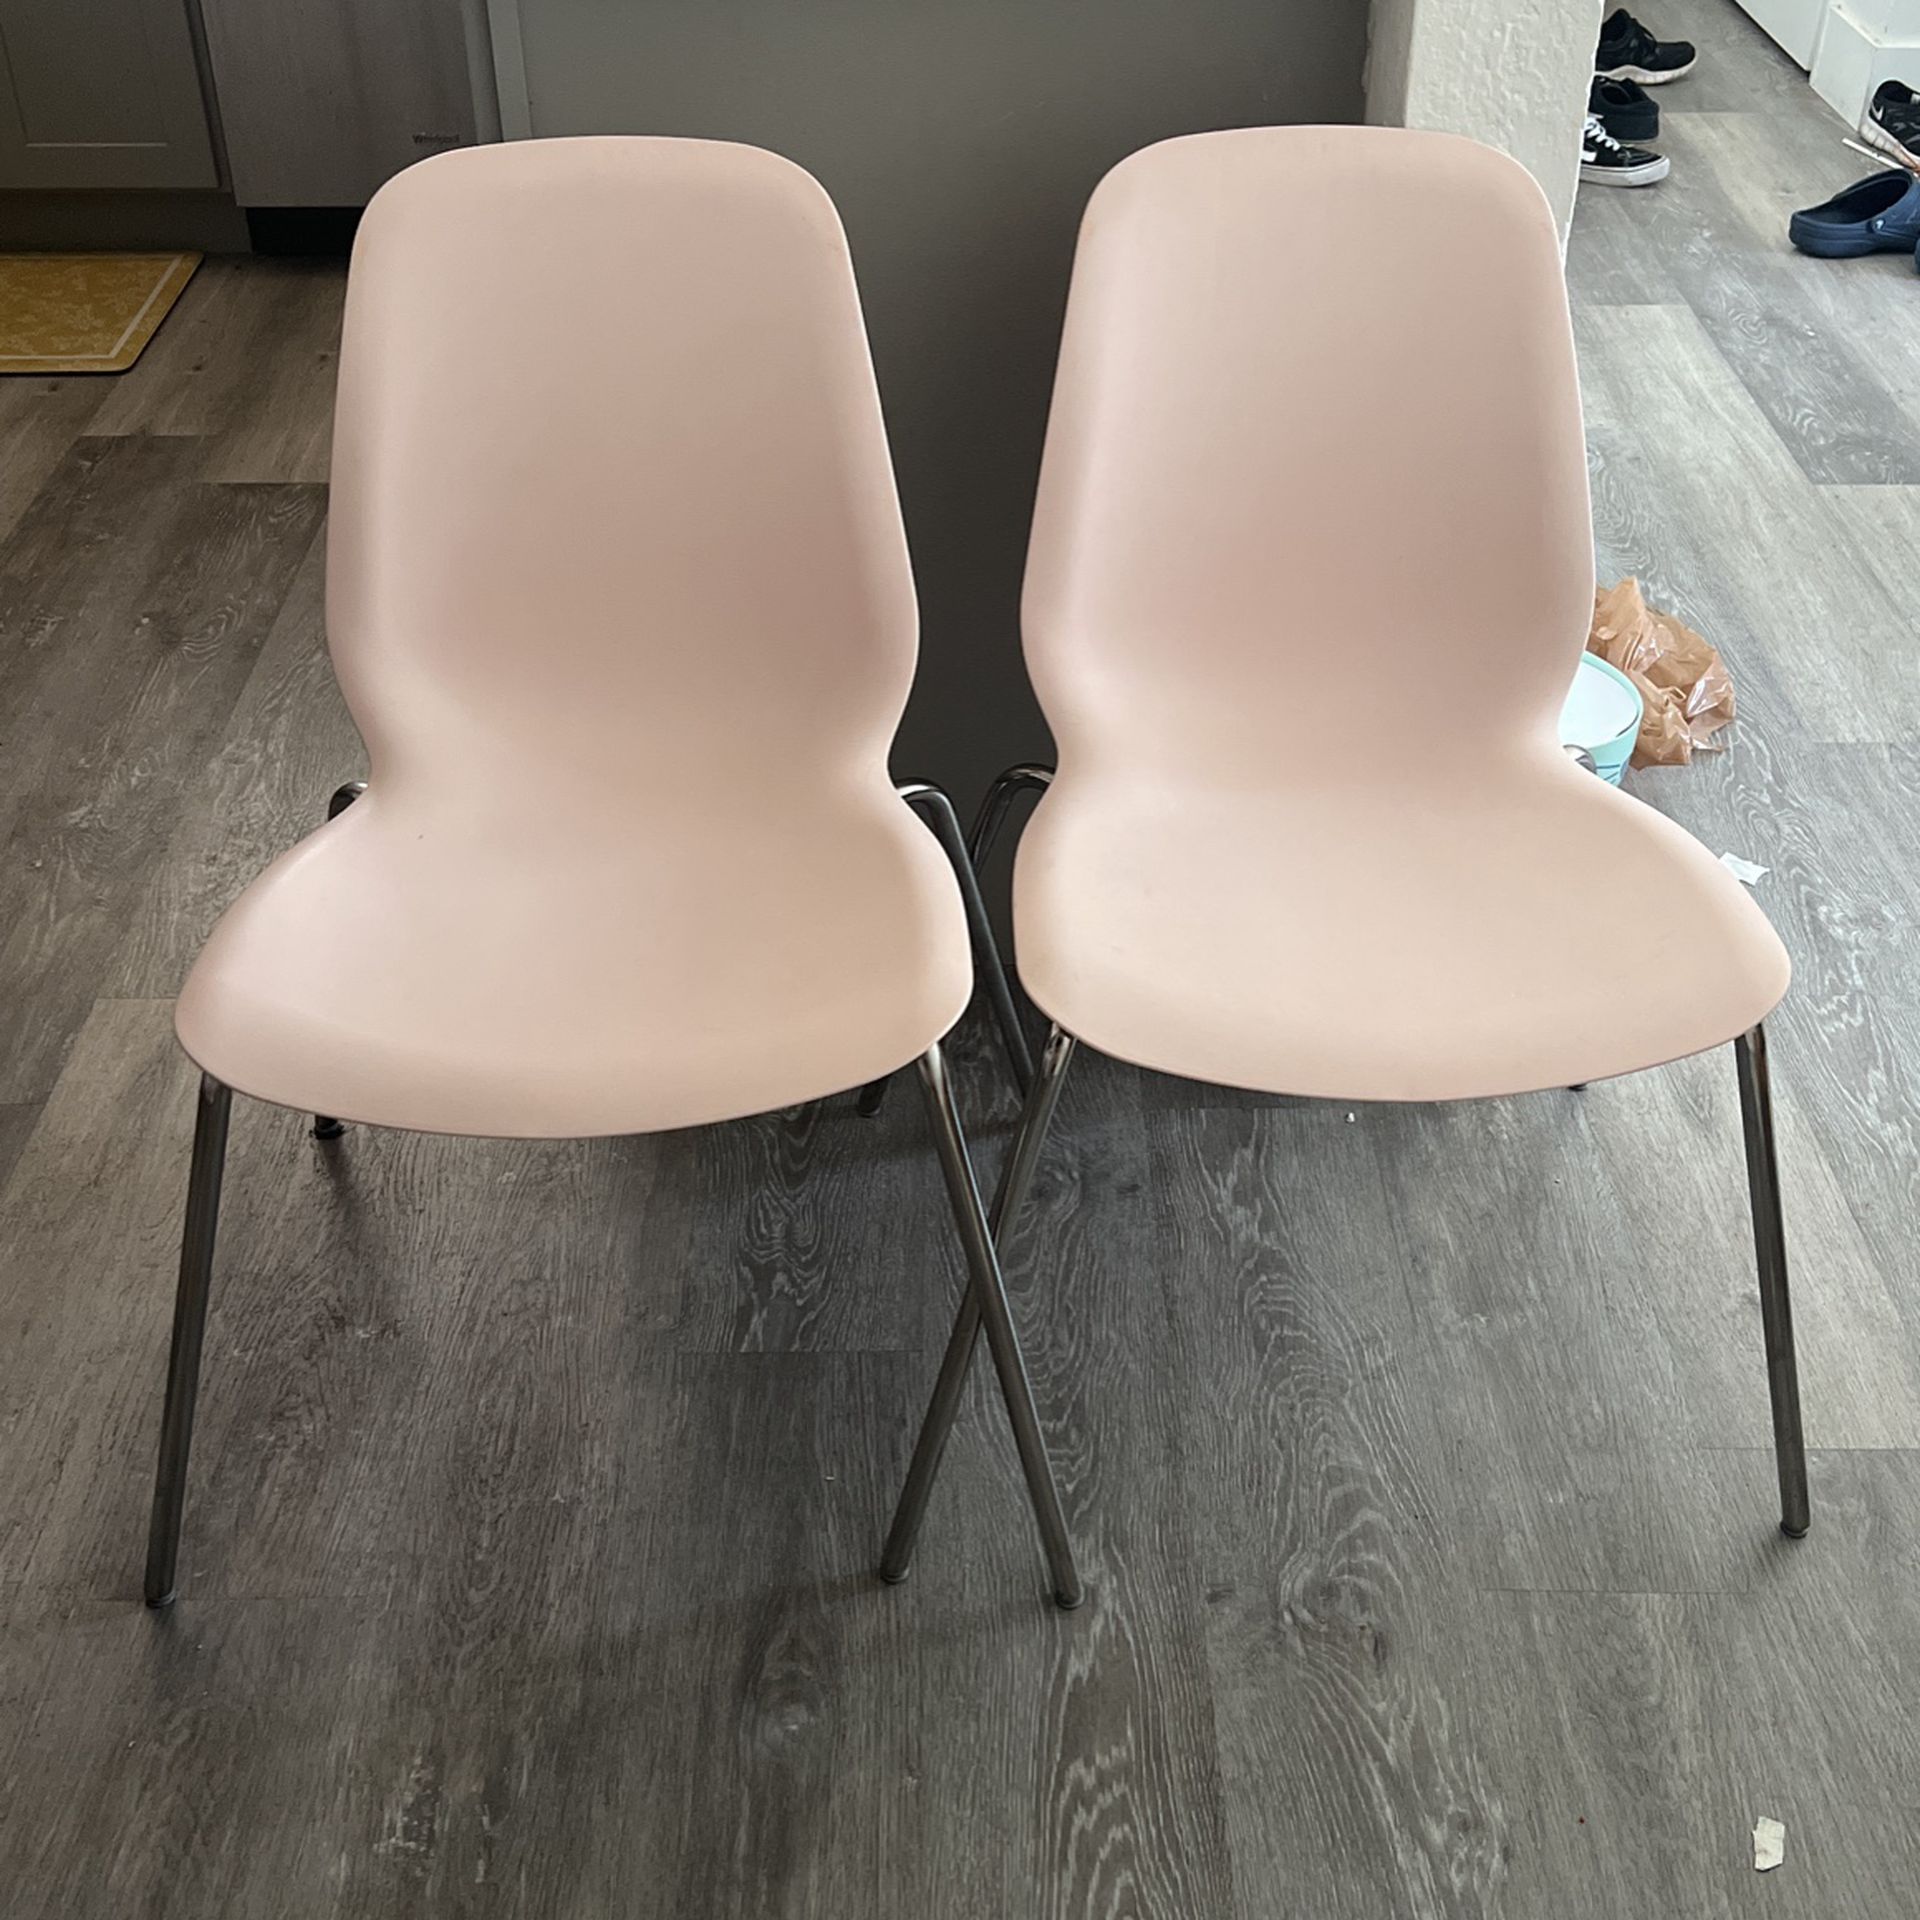 Pink IKEA Plastic Chairs